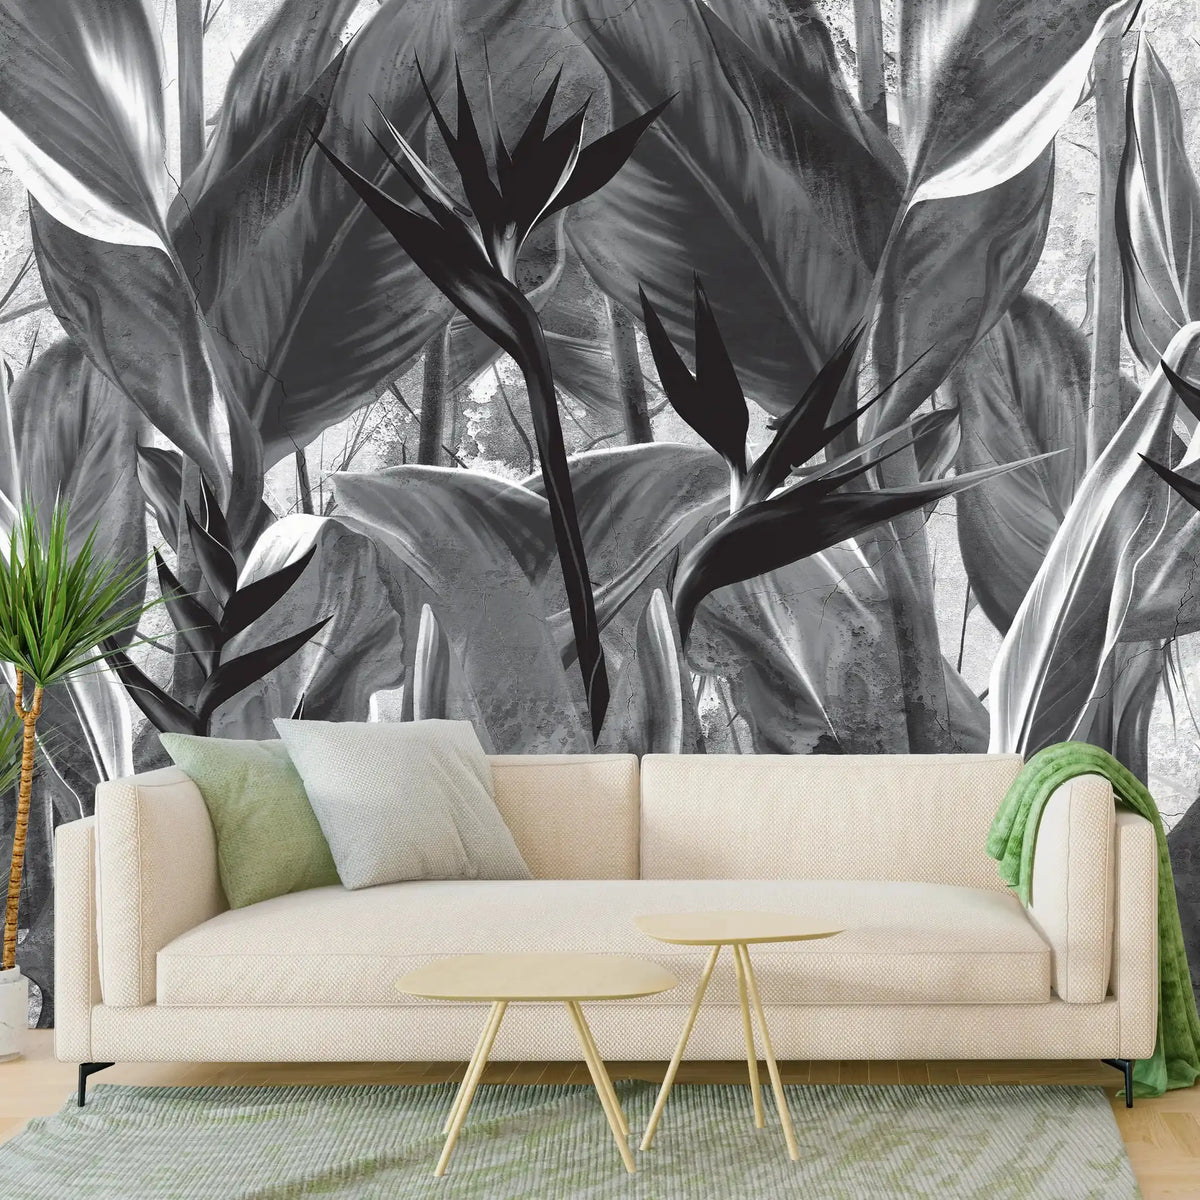 3006-E / Peel and Stick Botanical Wallpaper - Bird of Paradise Design, Easy Install Wall Mural - Artevella